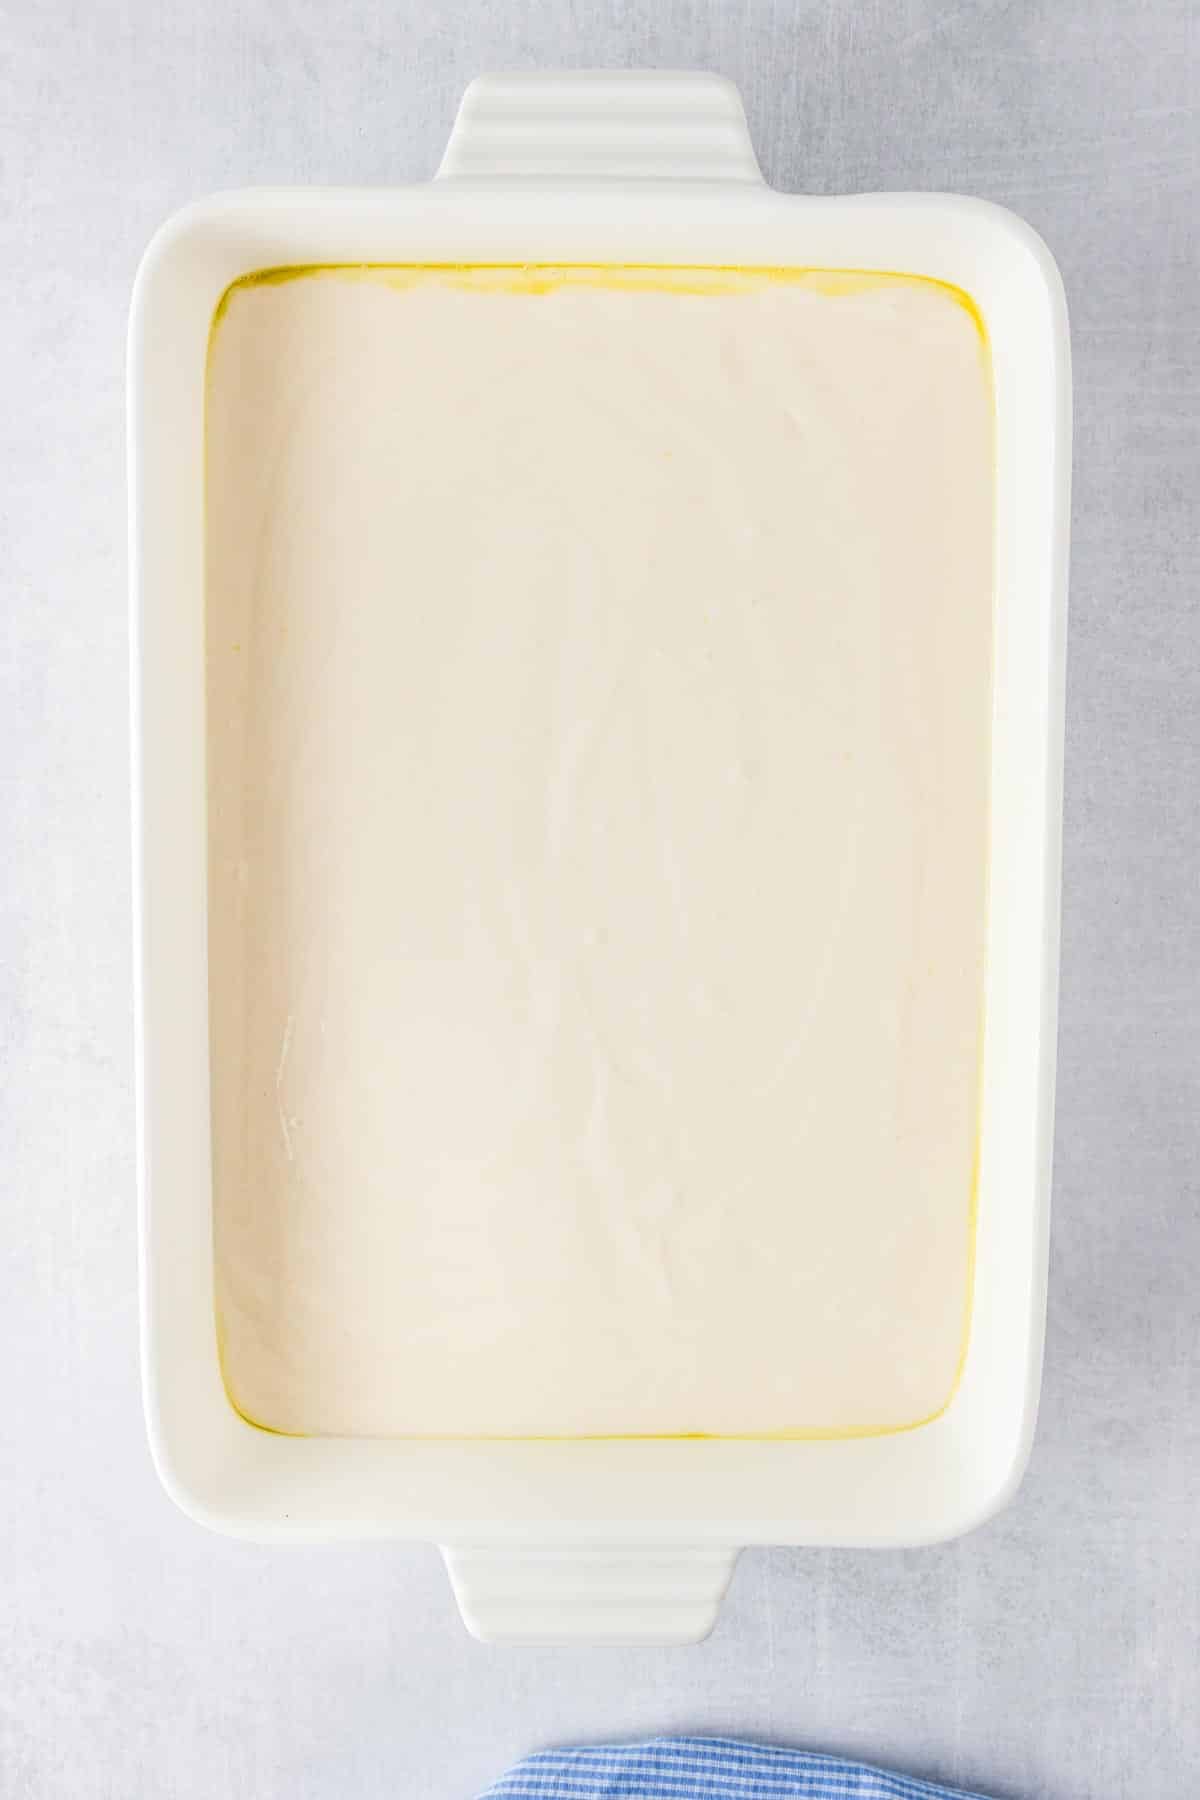 A rectangular white baking dish filled with unbaked white cake batter.